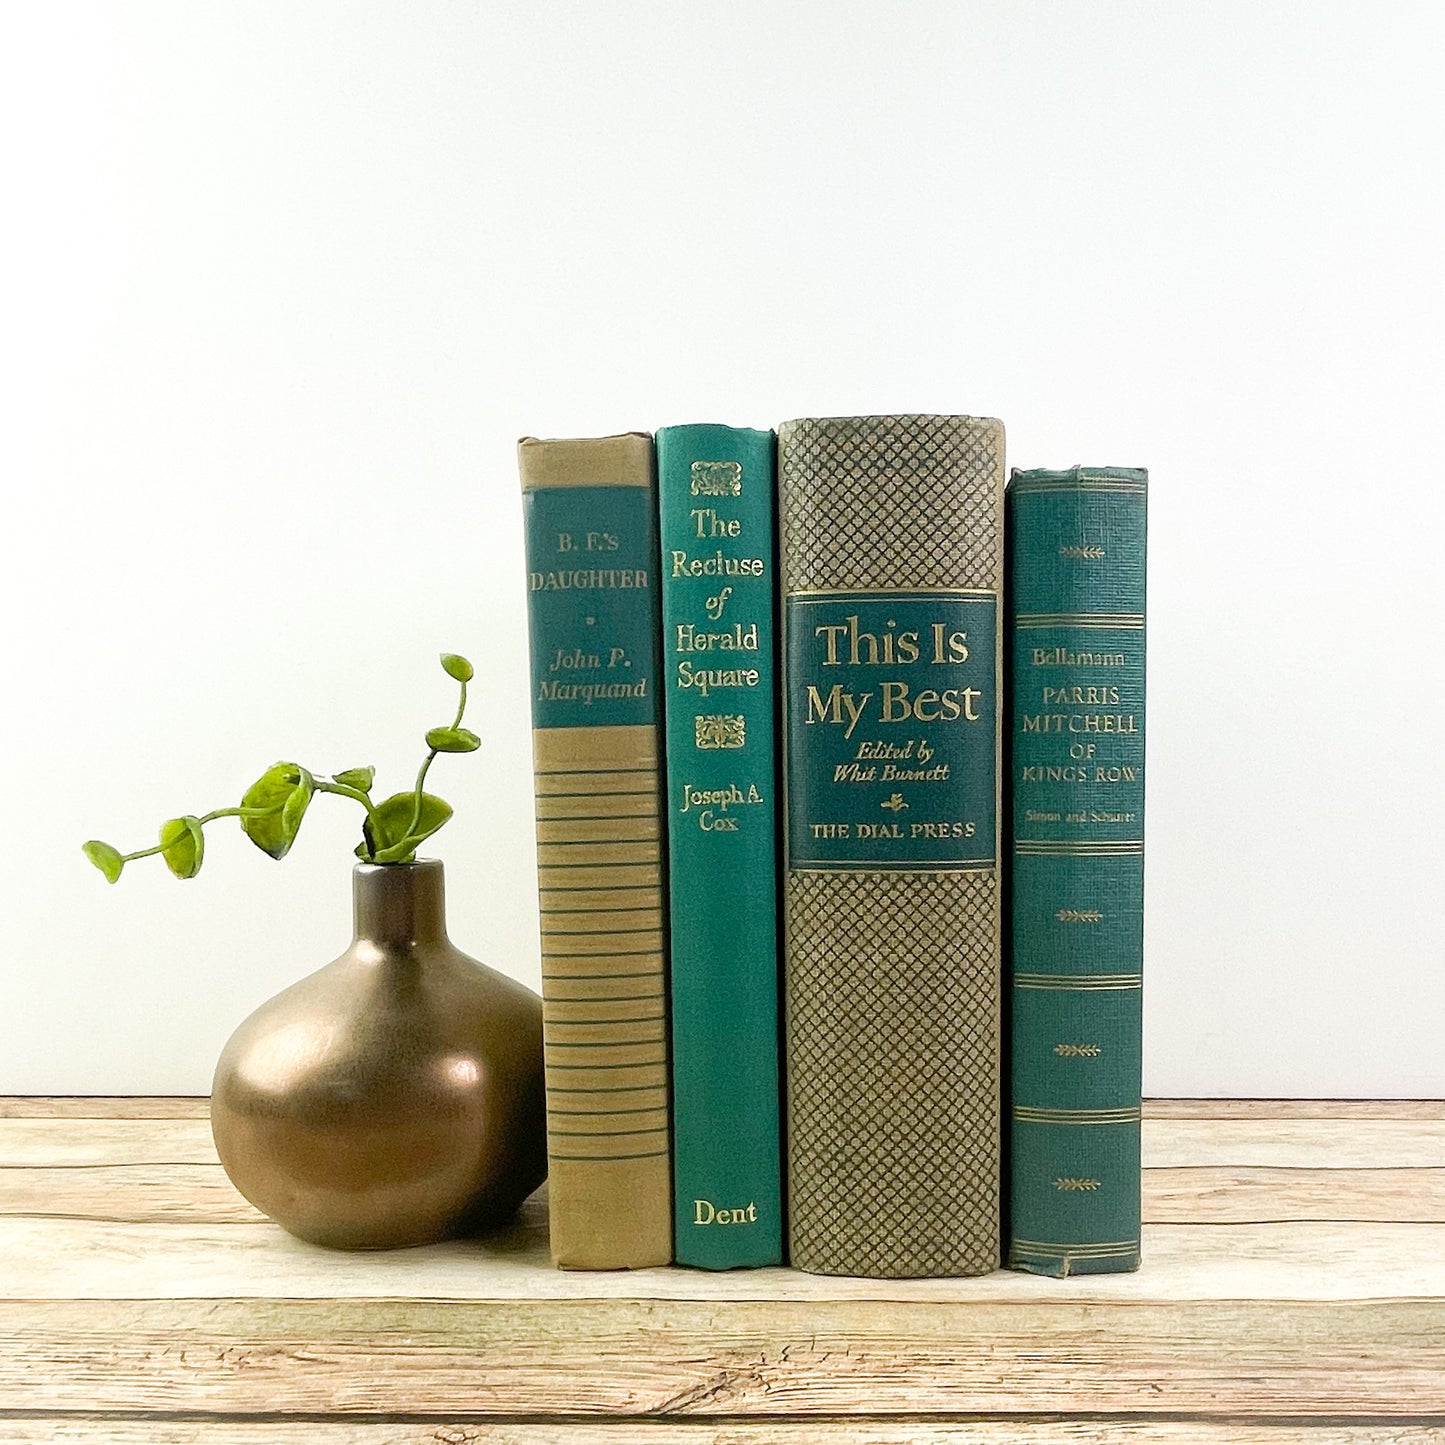 Classic Shelf Design with Green Books